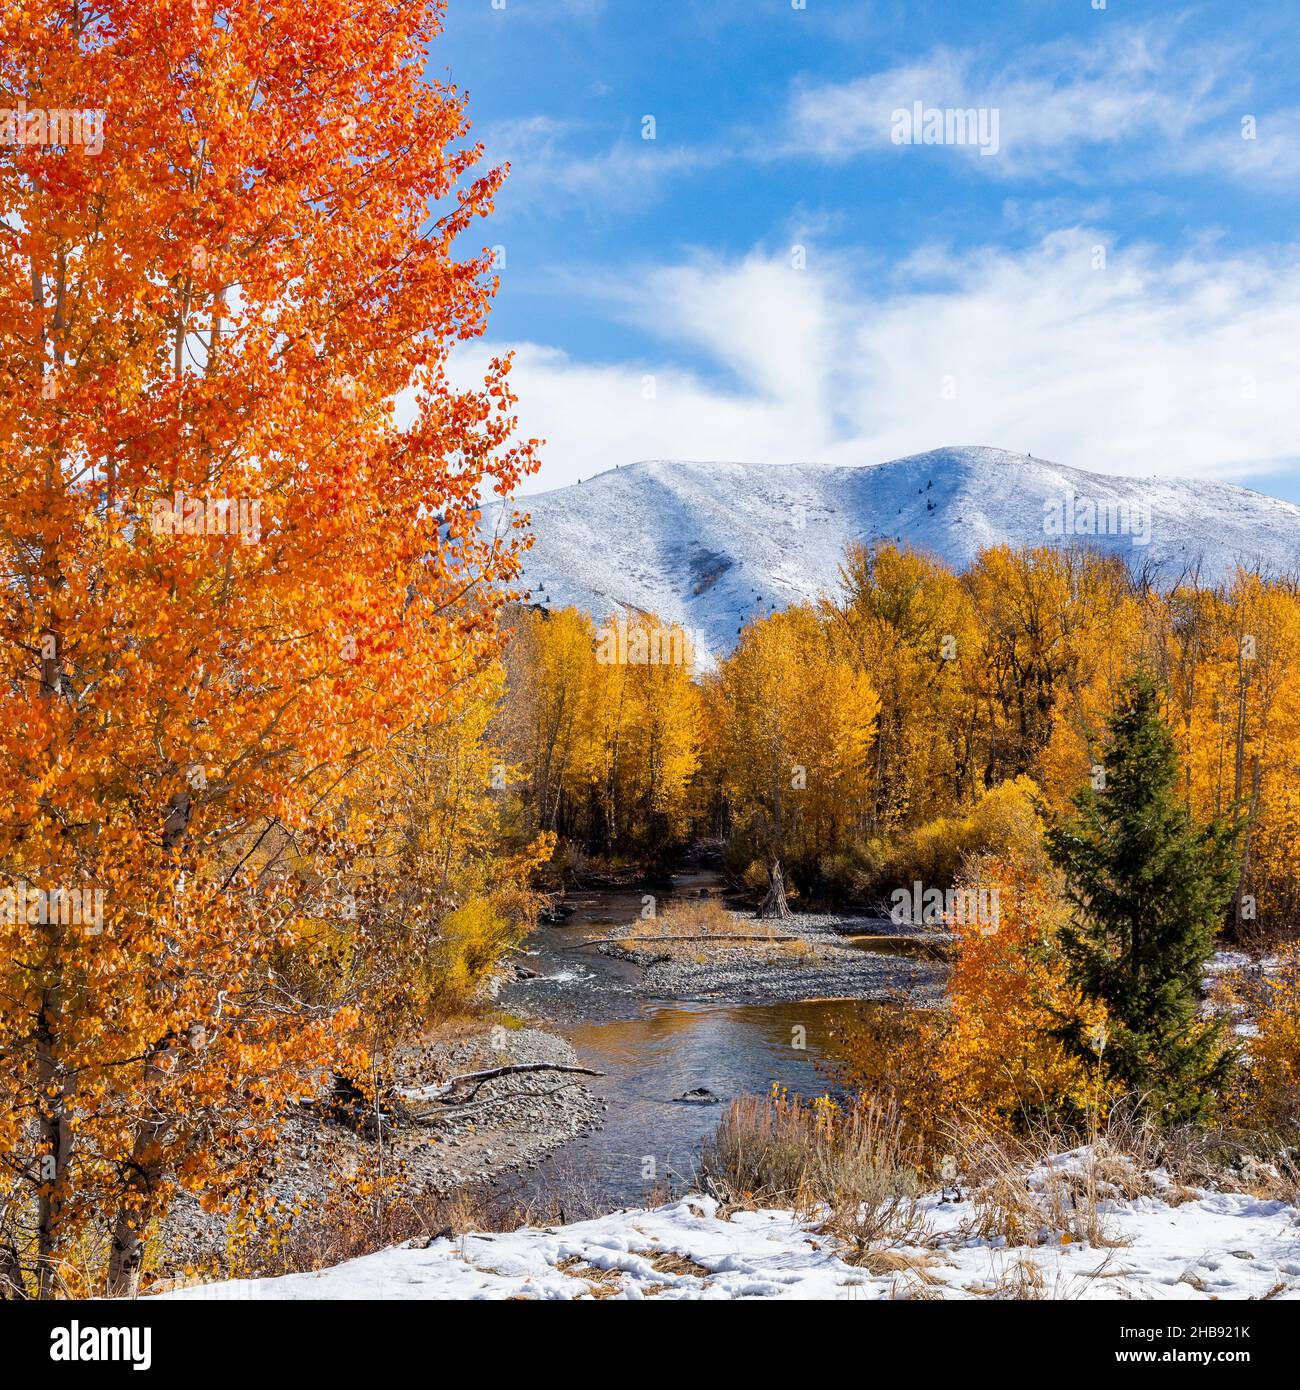 USA, Idaho, Ketchum, Fall foliage in mountains near Sun Valley Stock Photo  - Alamy